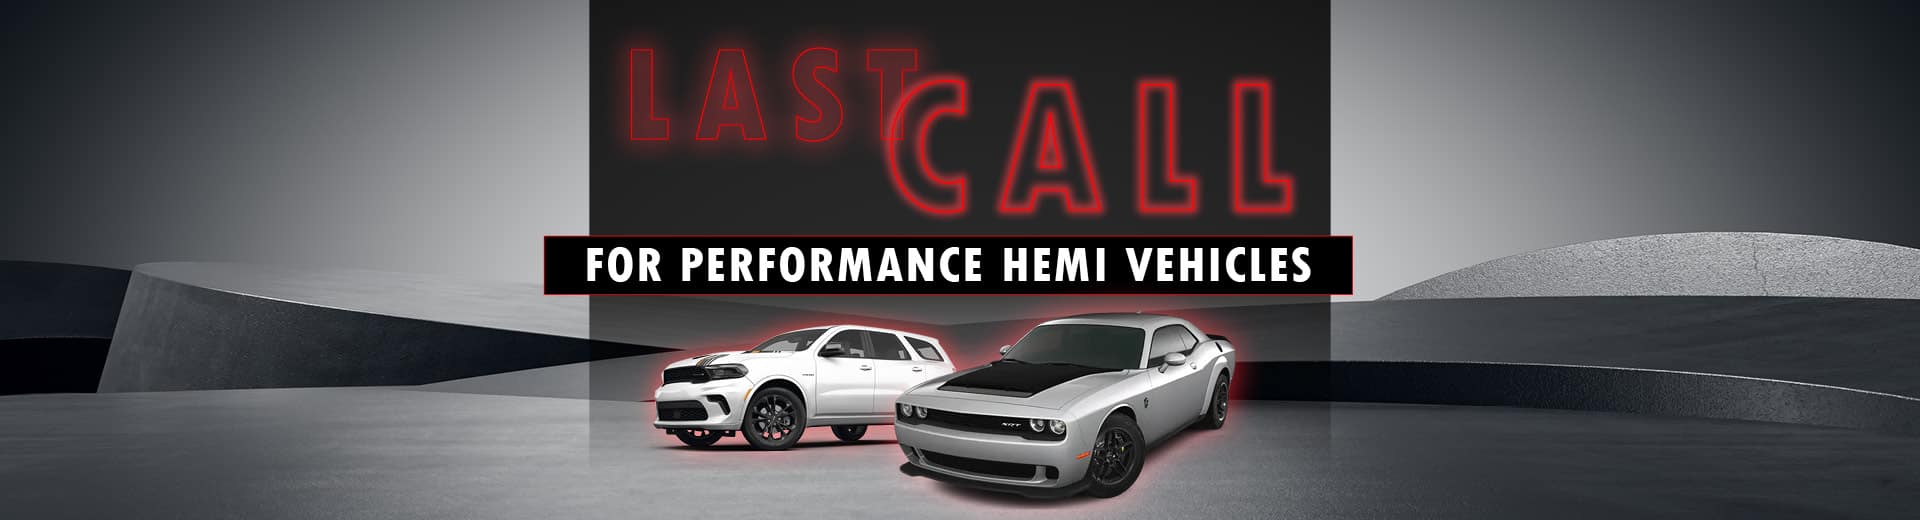 Last Call for Performance Hemi Vehicles